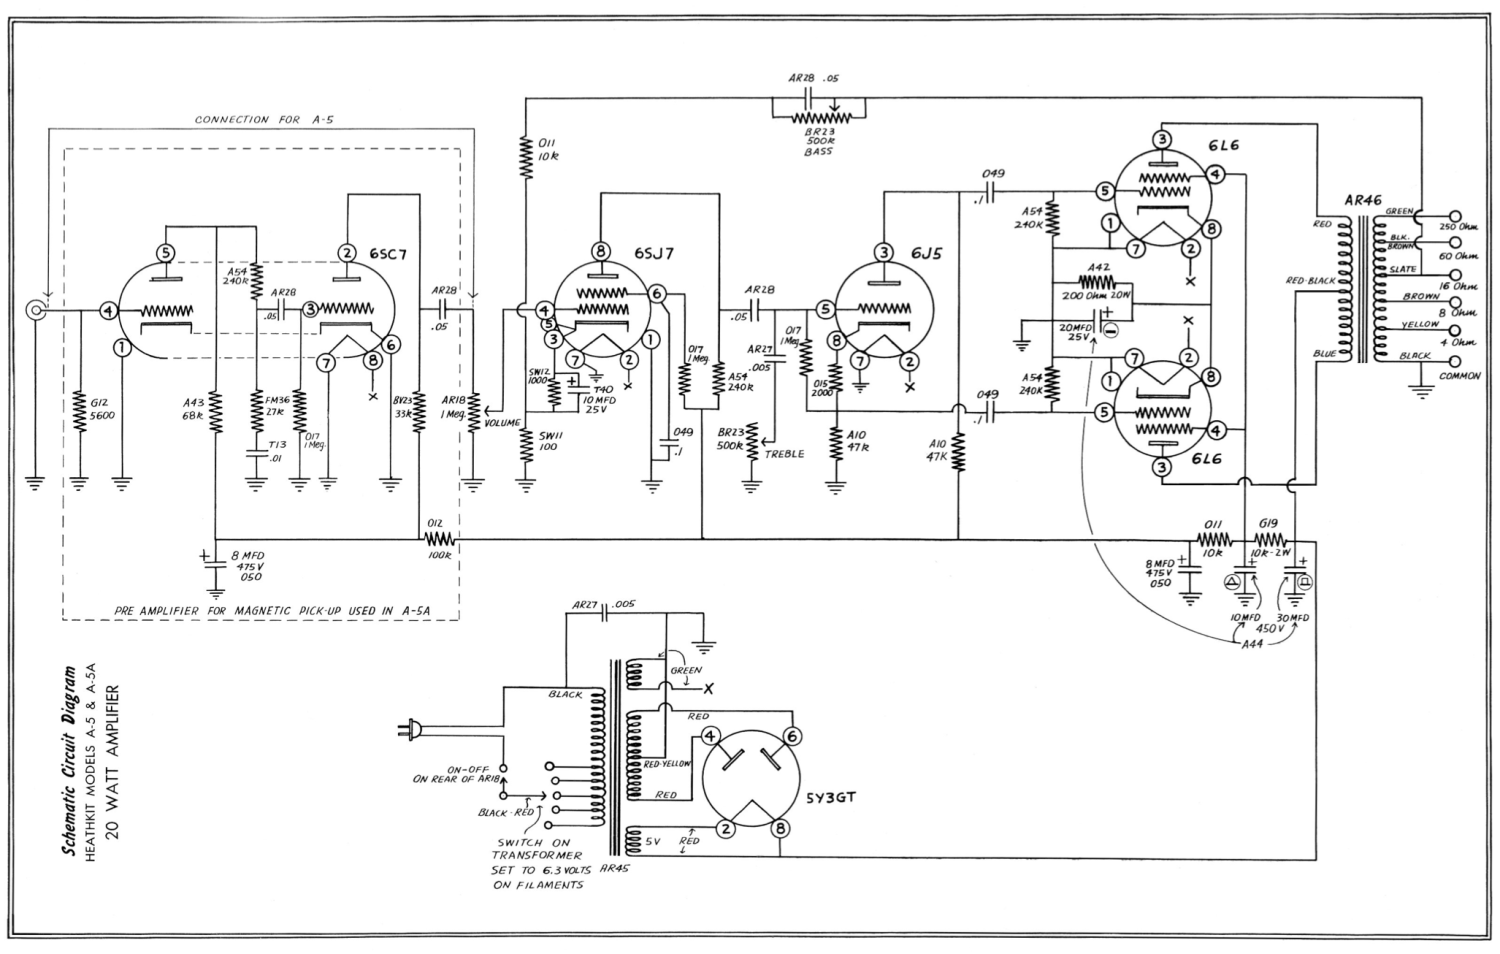 Heathkit A-5 20 Watt Amplifier - Schematic